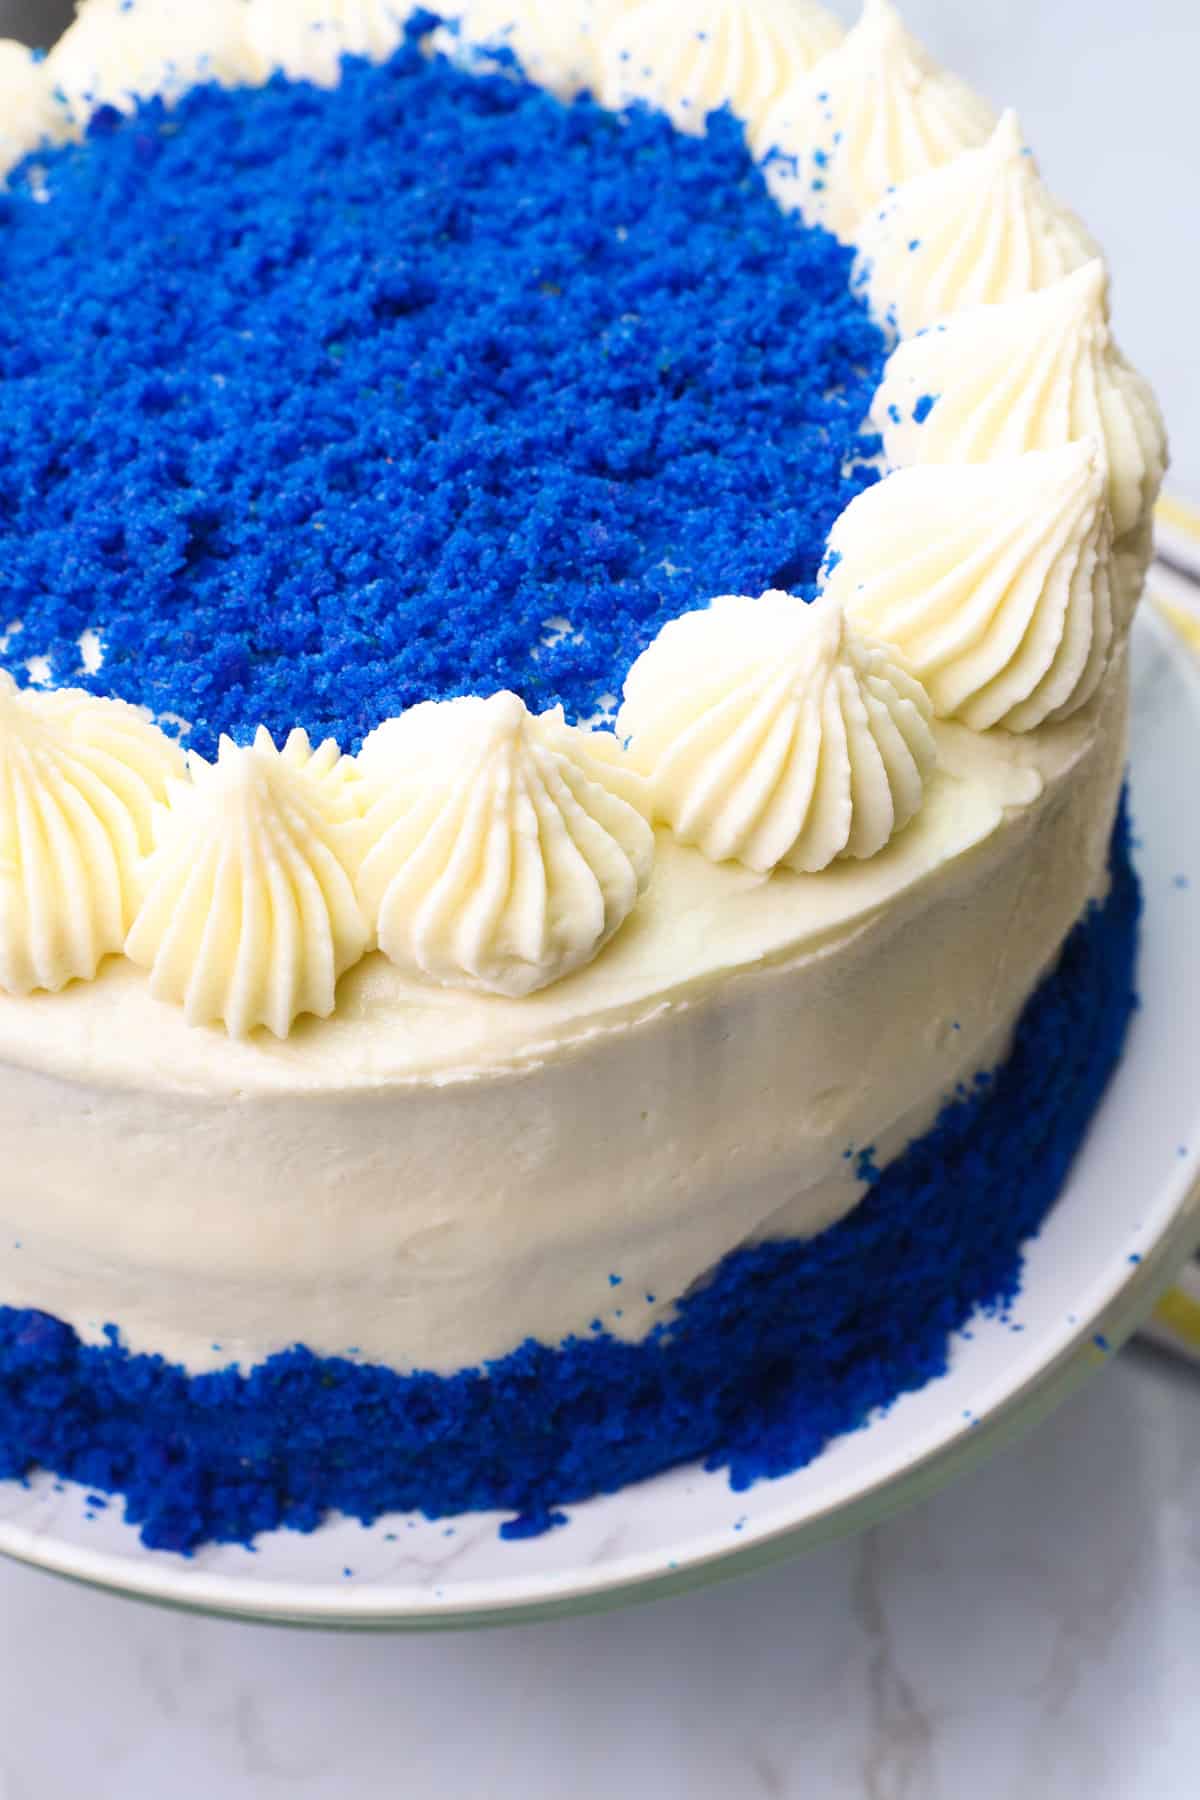 Beautifully finished and surreal blue velvet cake